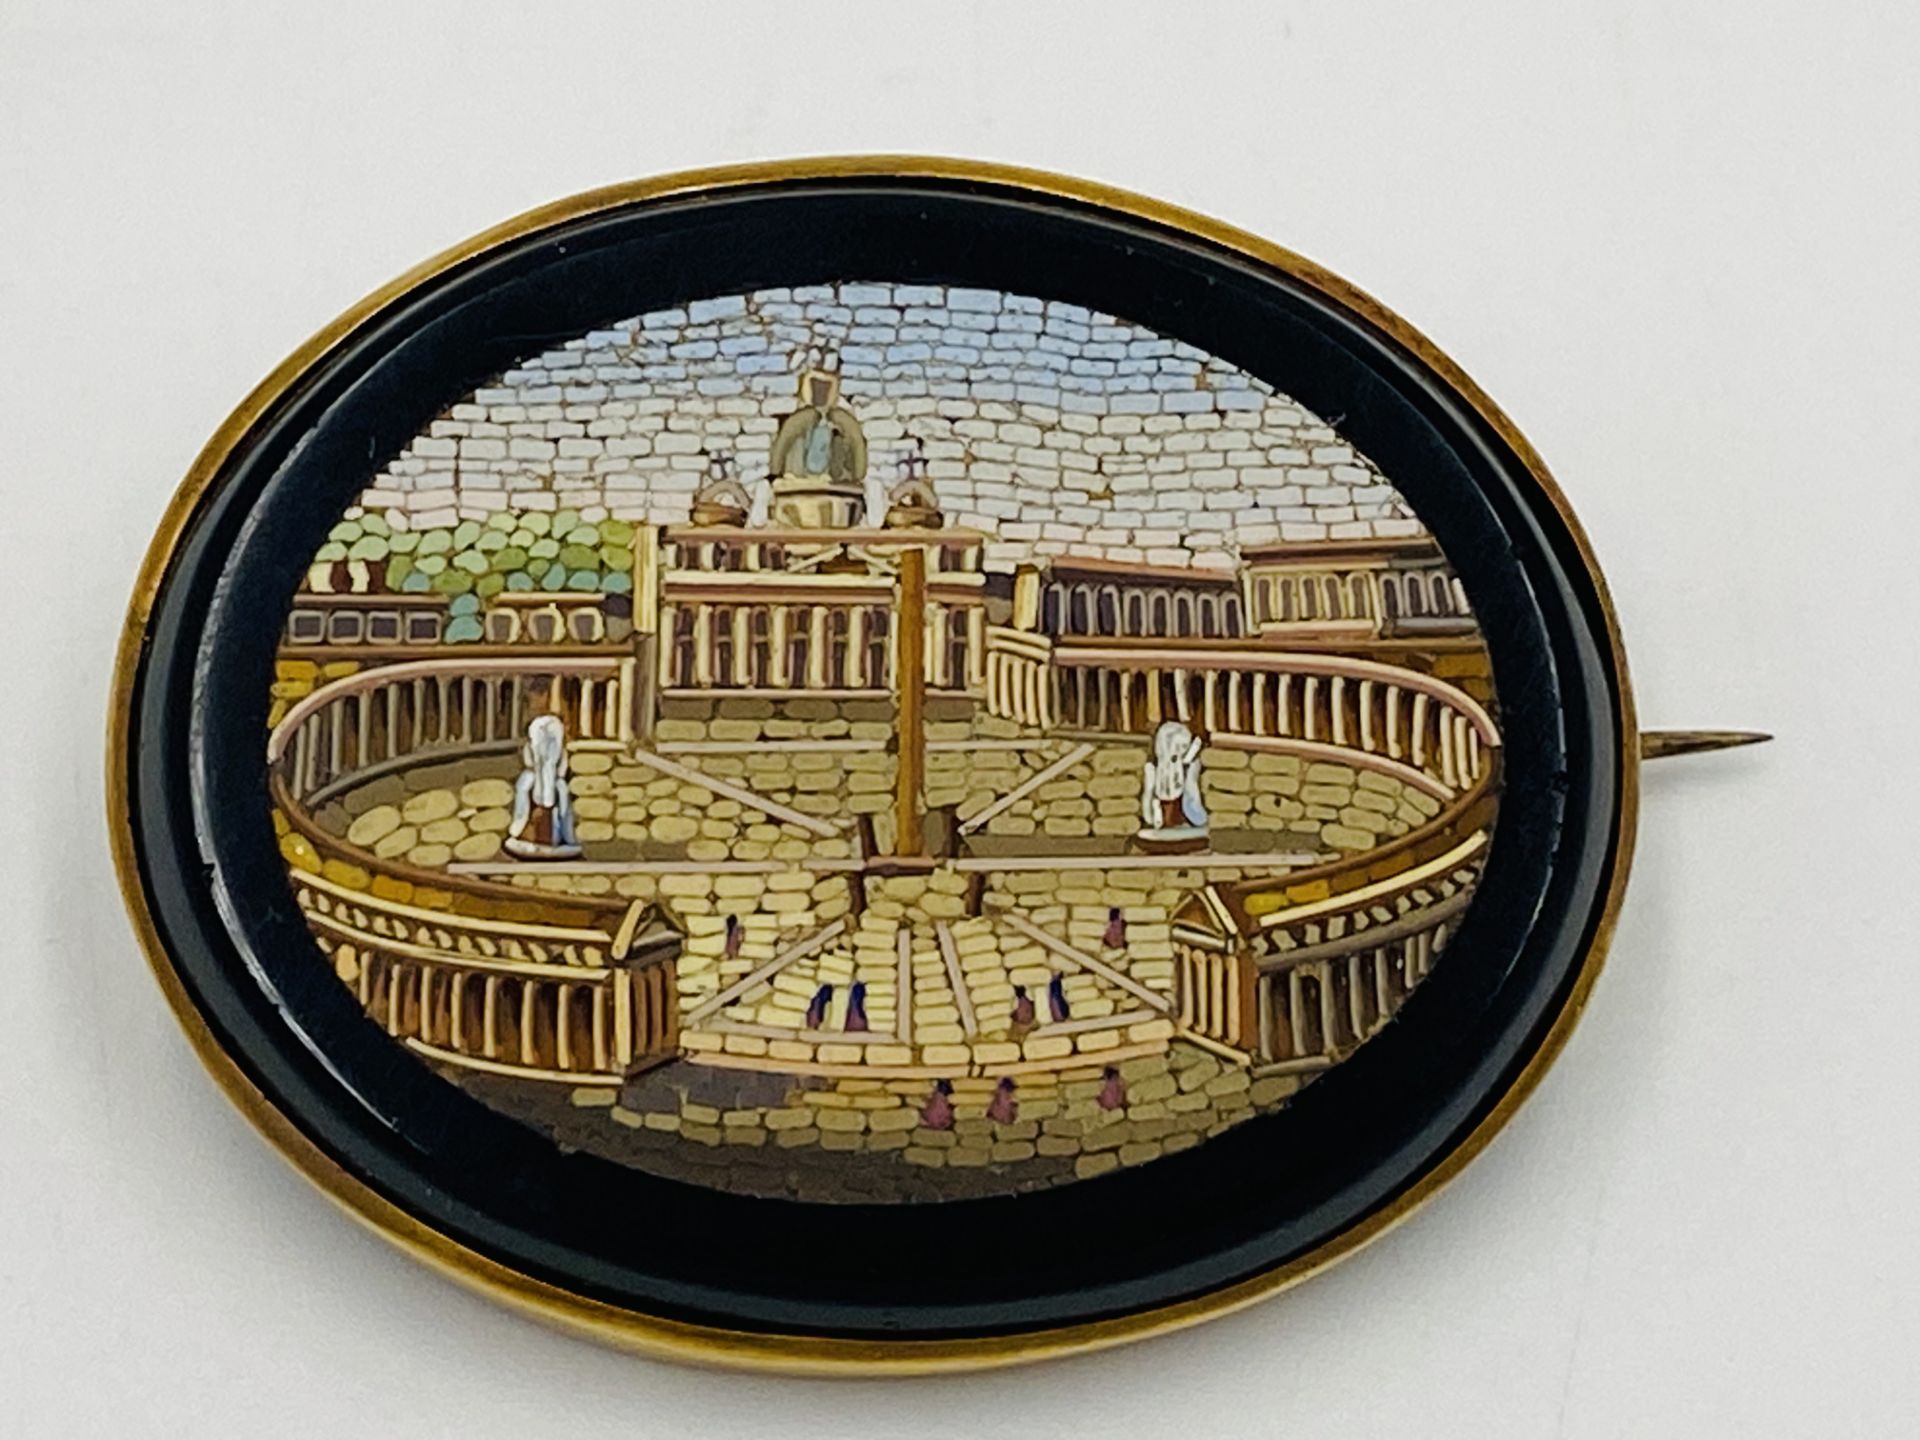 Micro mosaic gold brooch